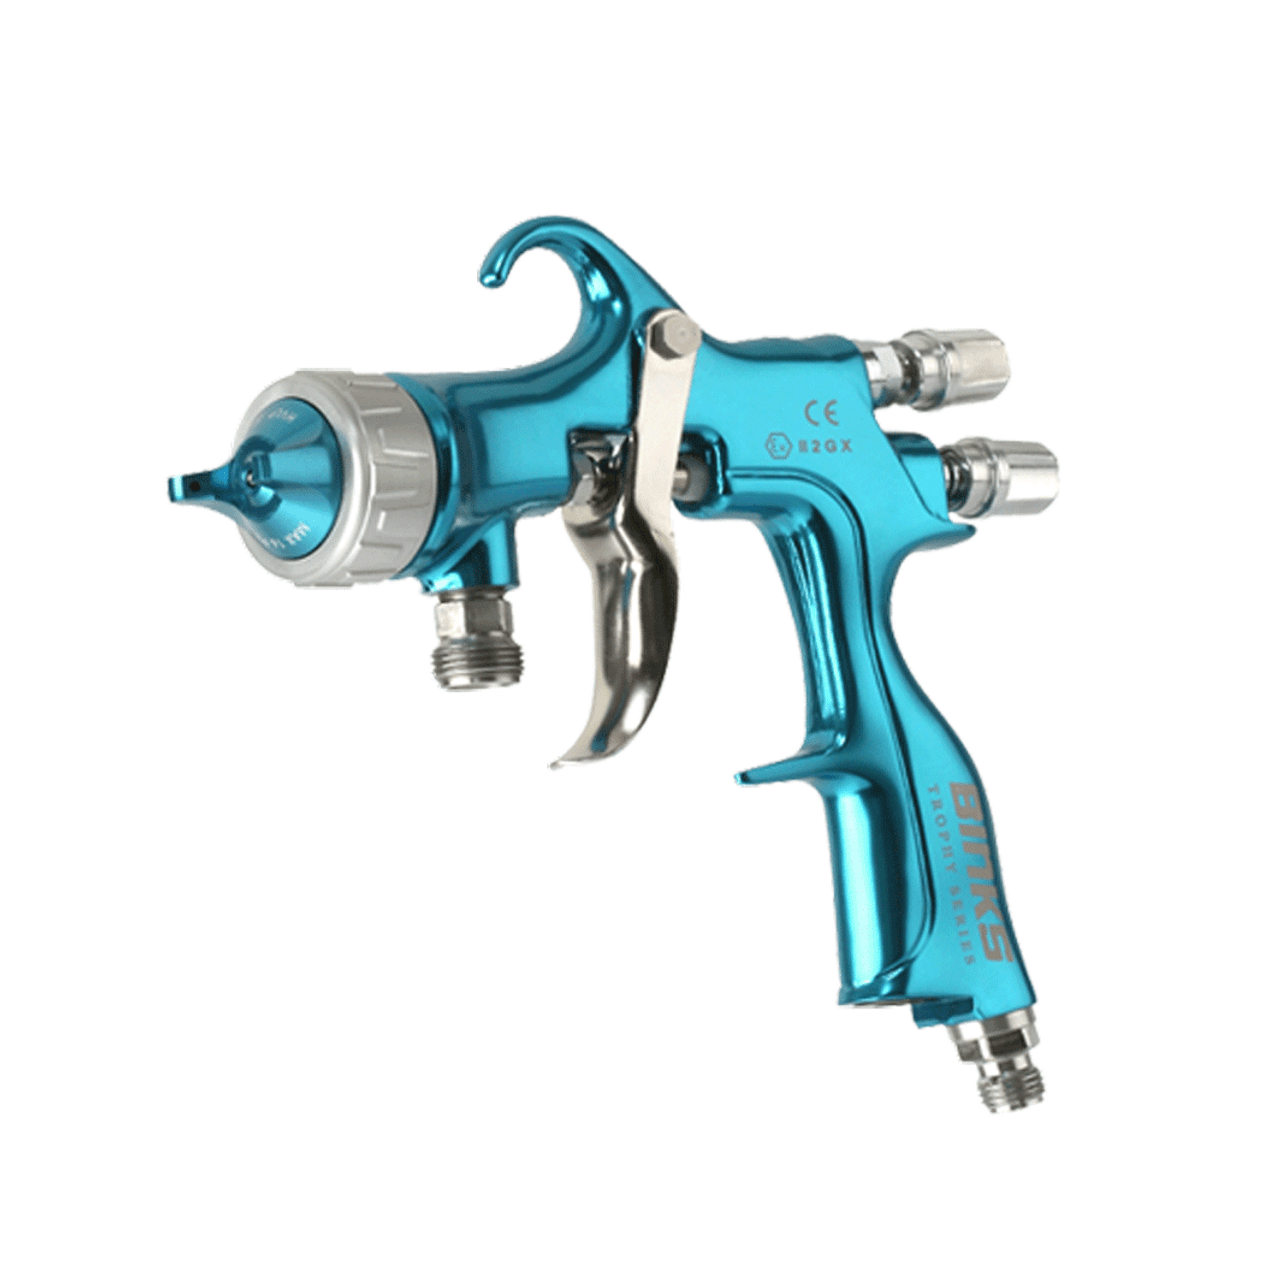 TFS Spray Gun Cleaning Kit